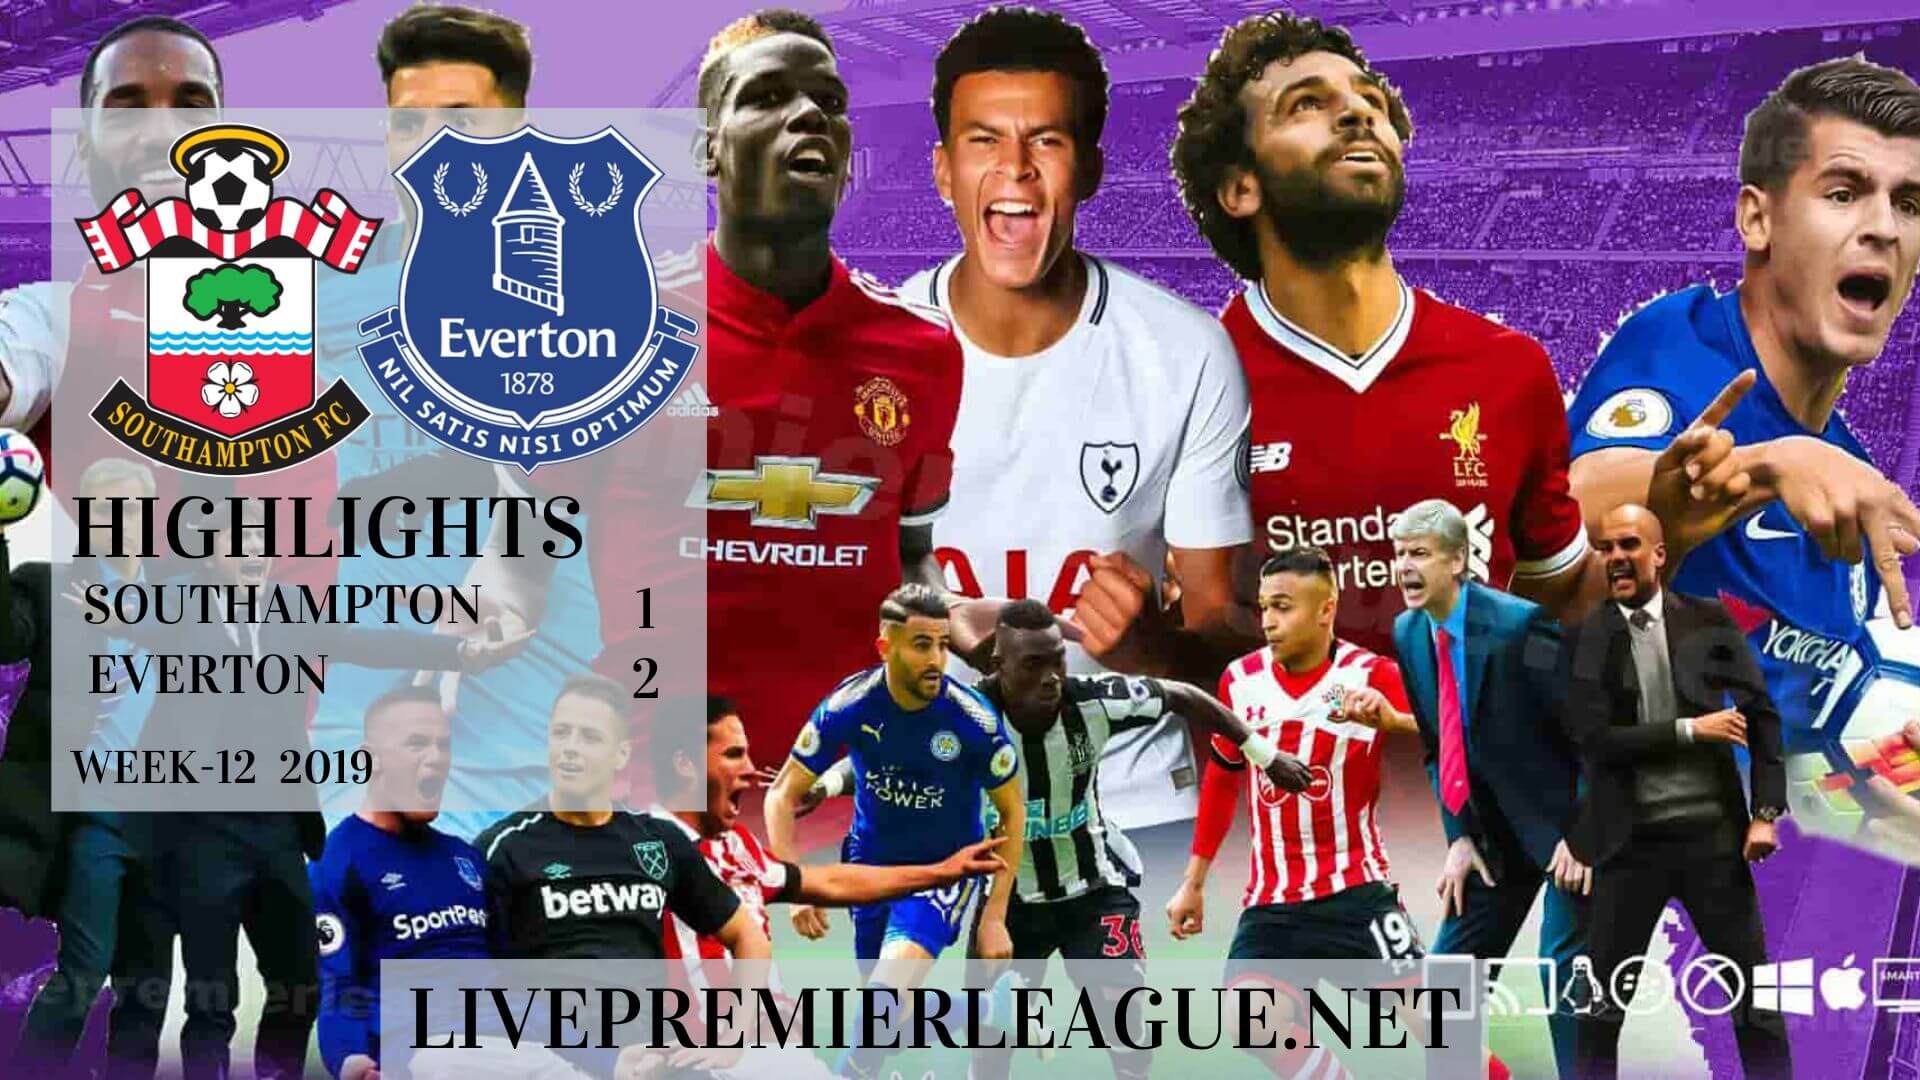 Southampton vs Everton Highlights 2019 Week 12